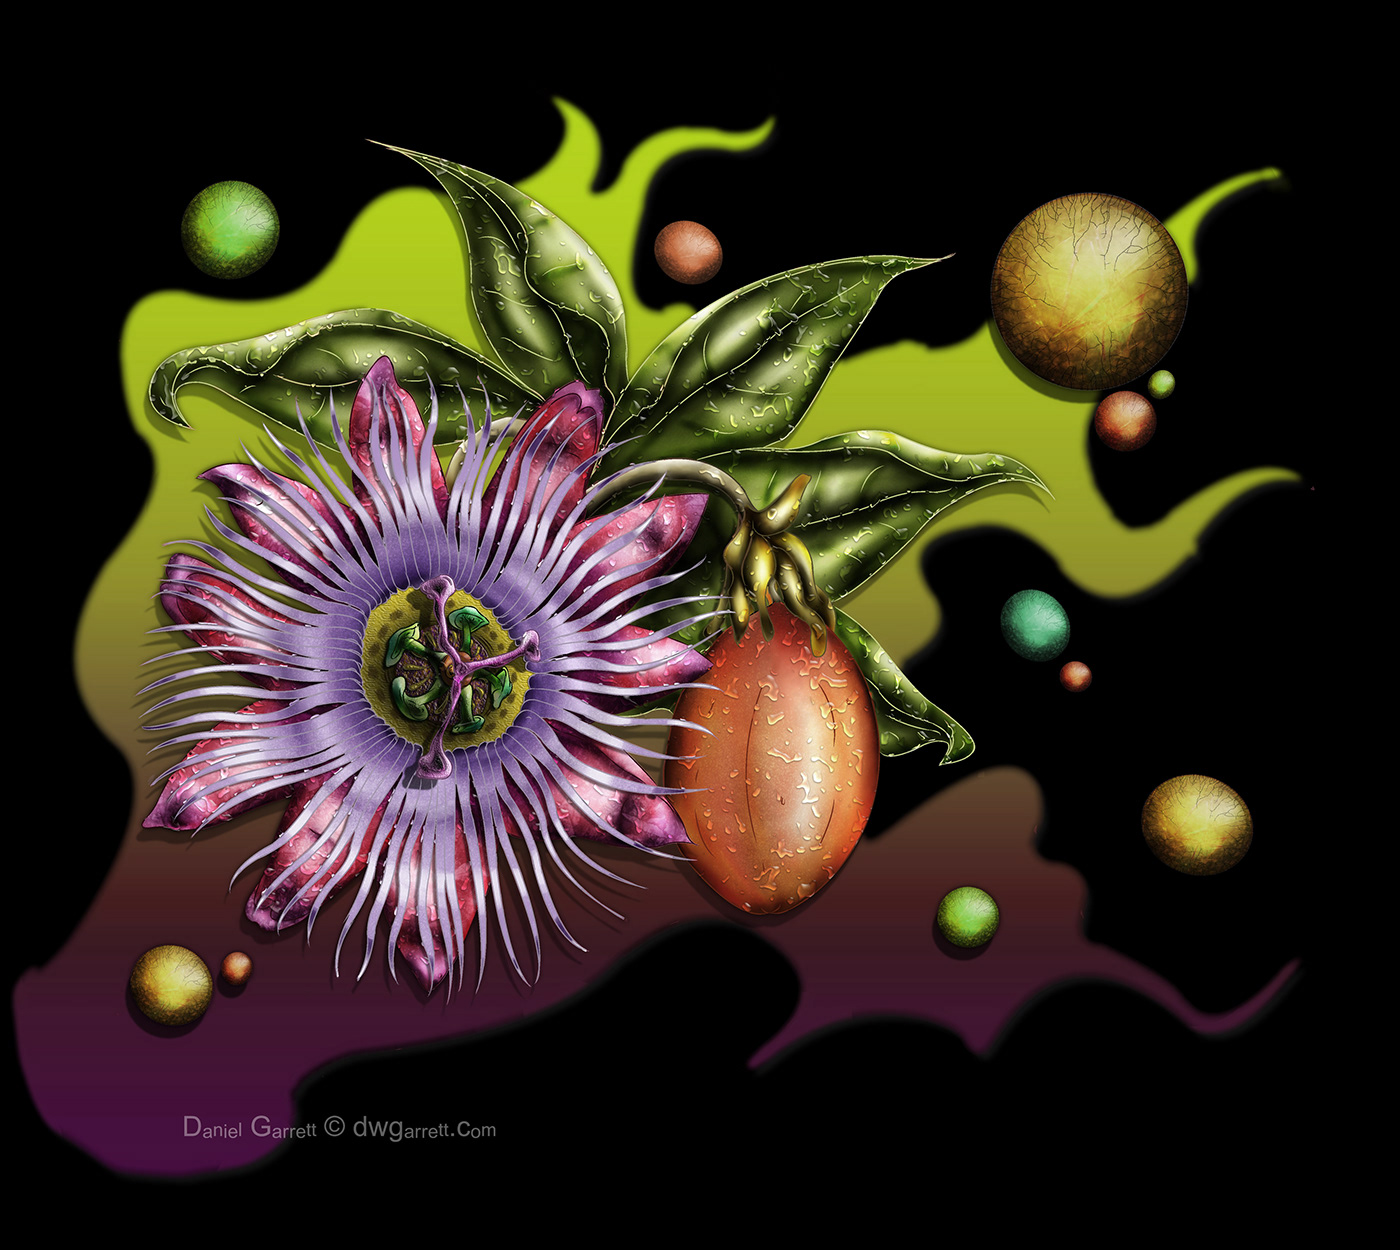 2dart digitalart flower Fruit passion passion fruit passionfruit